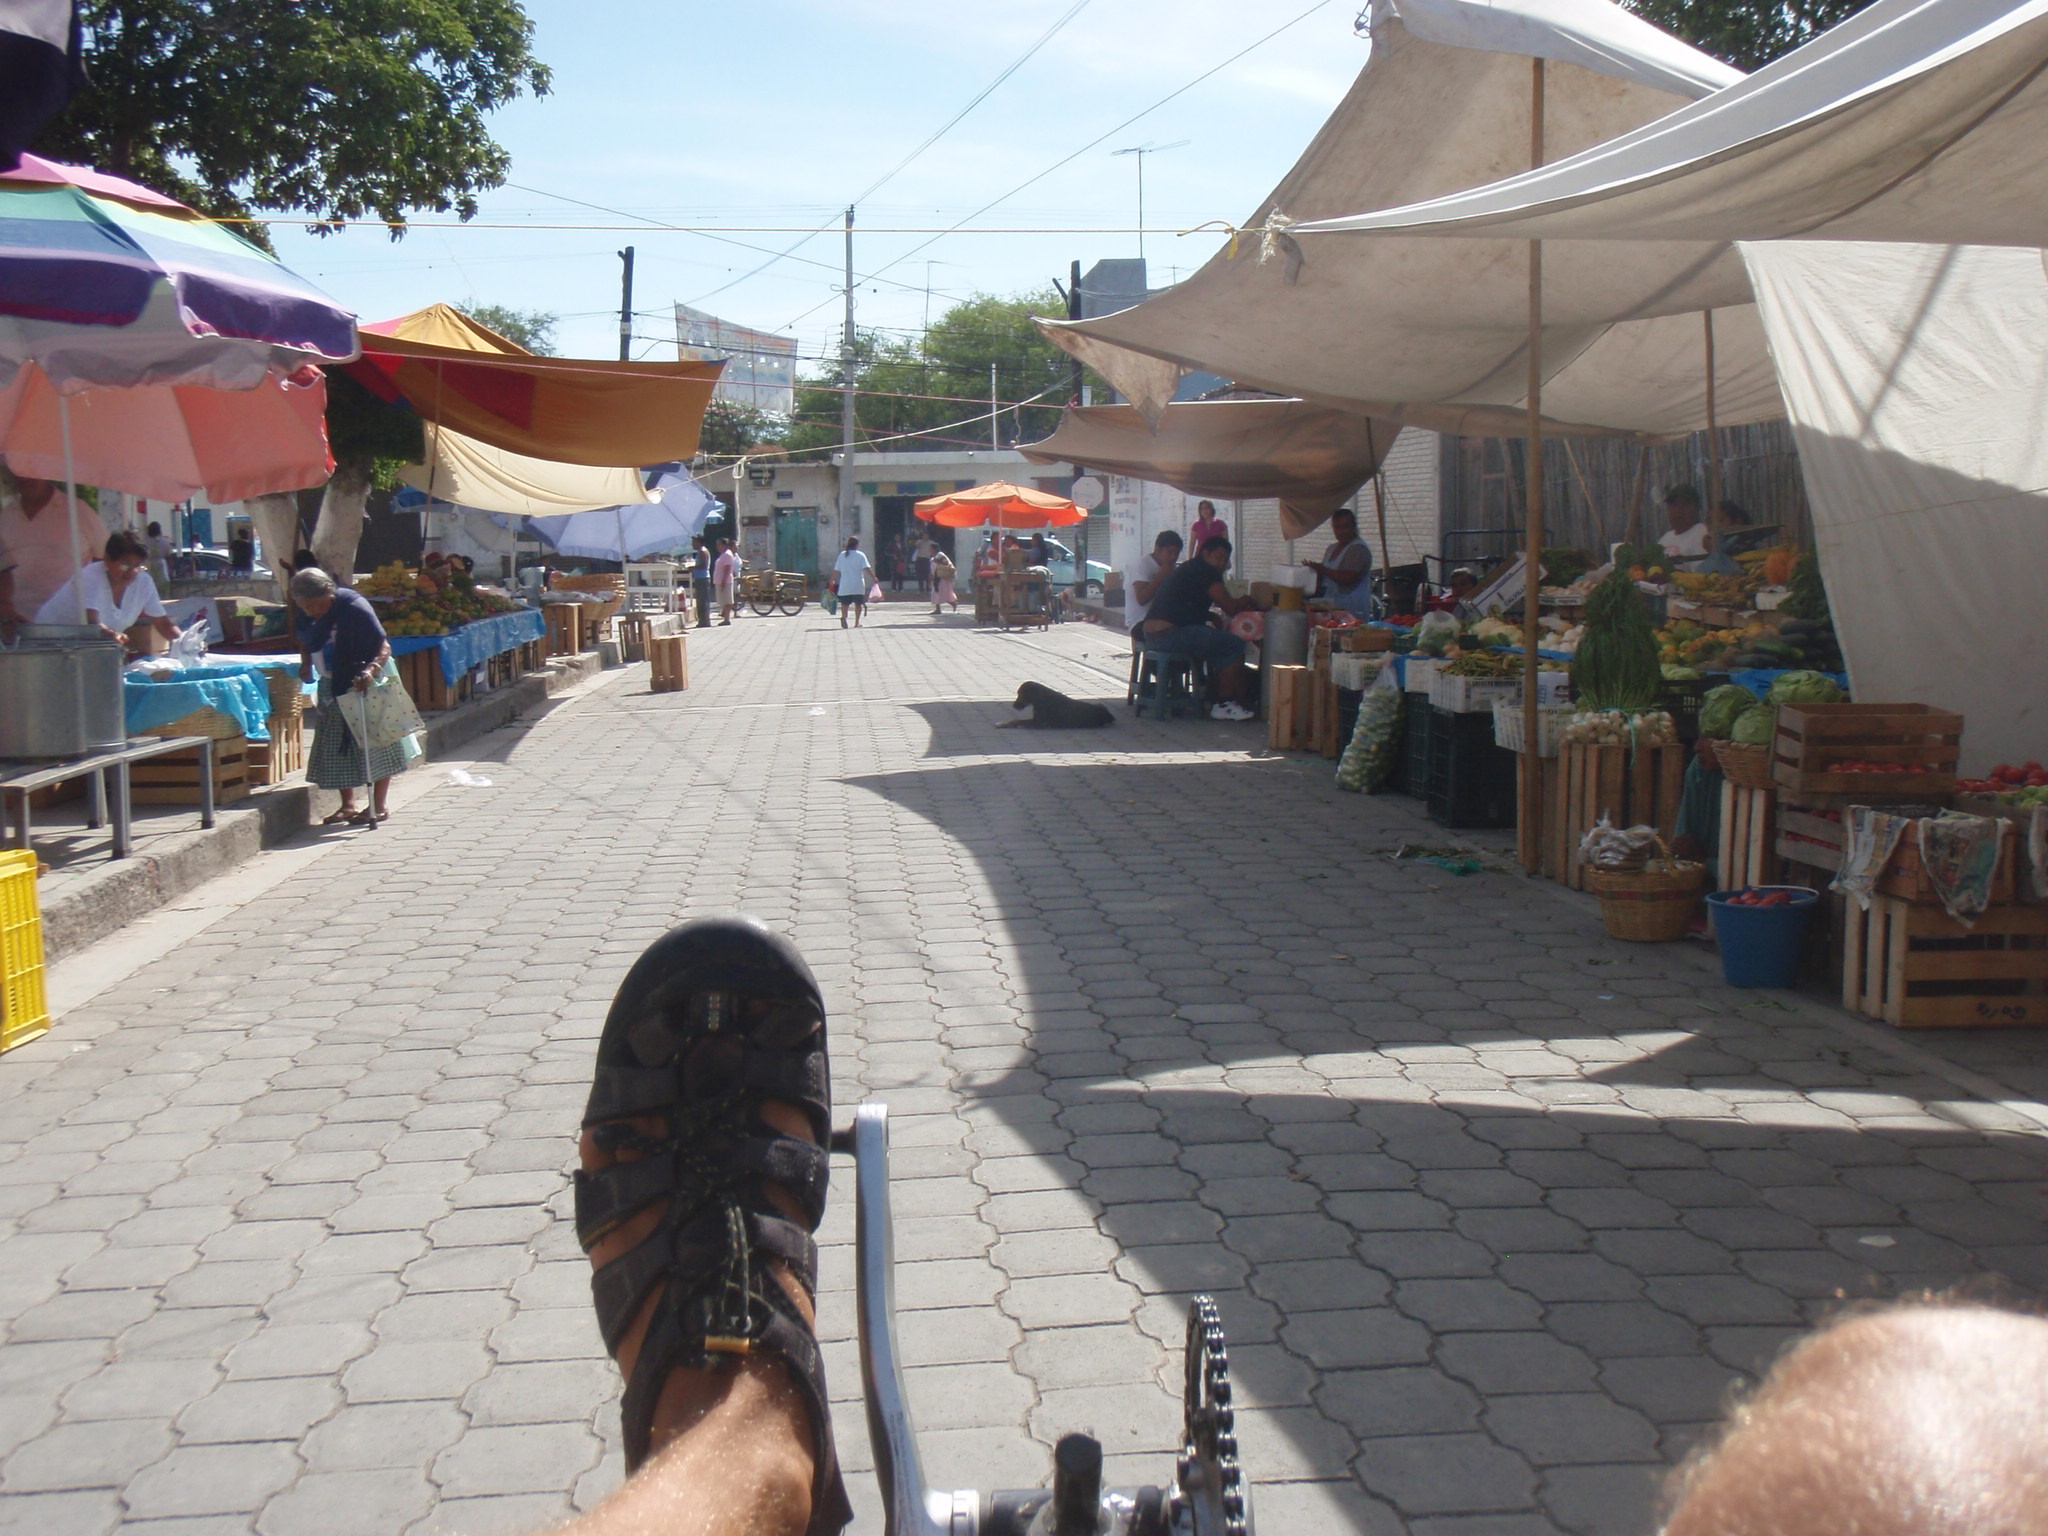 Market scene in little village off the autopista